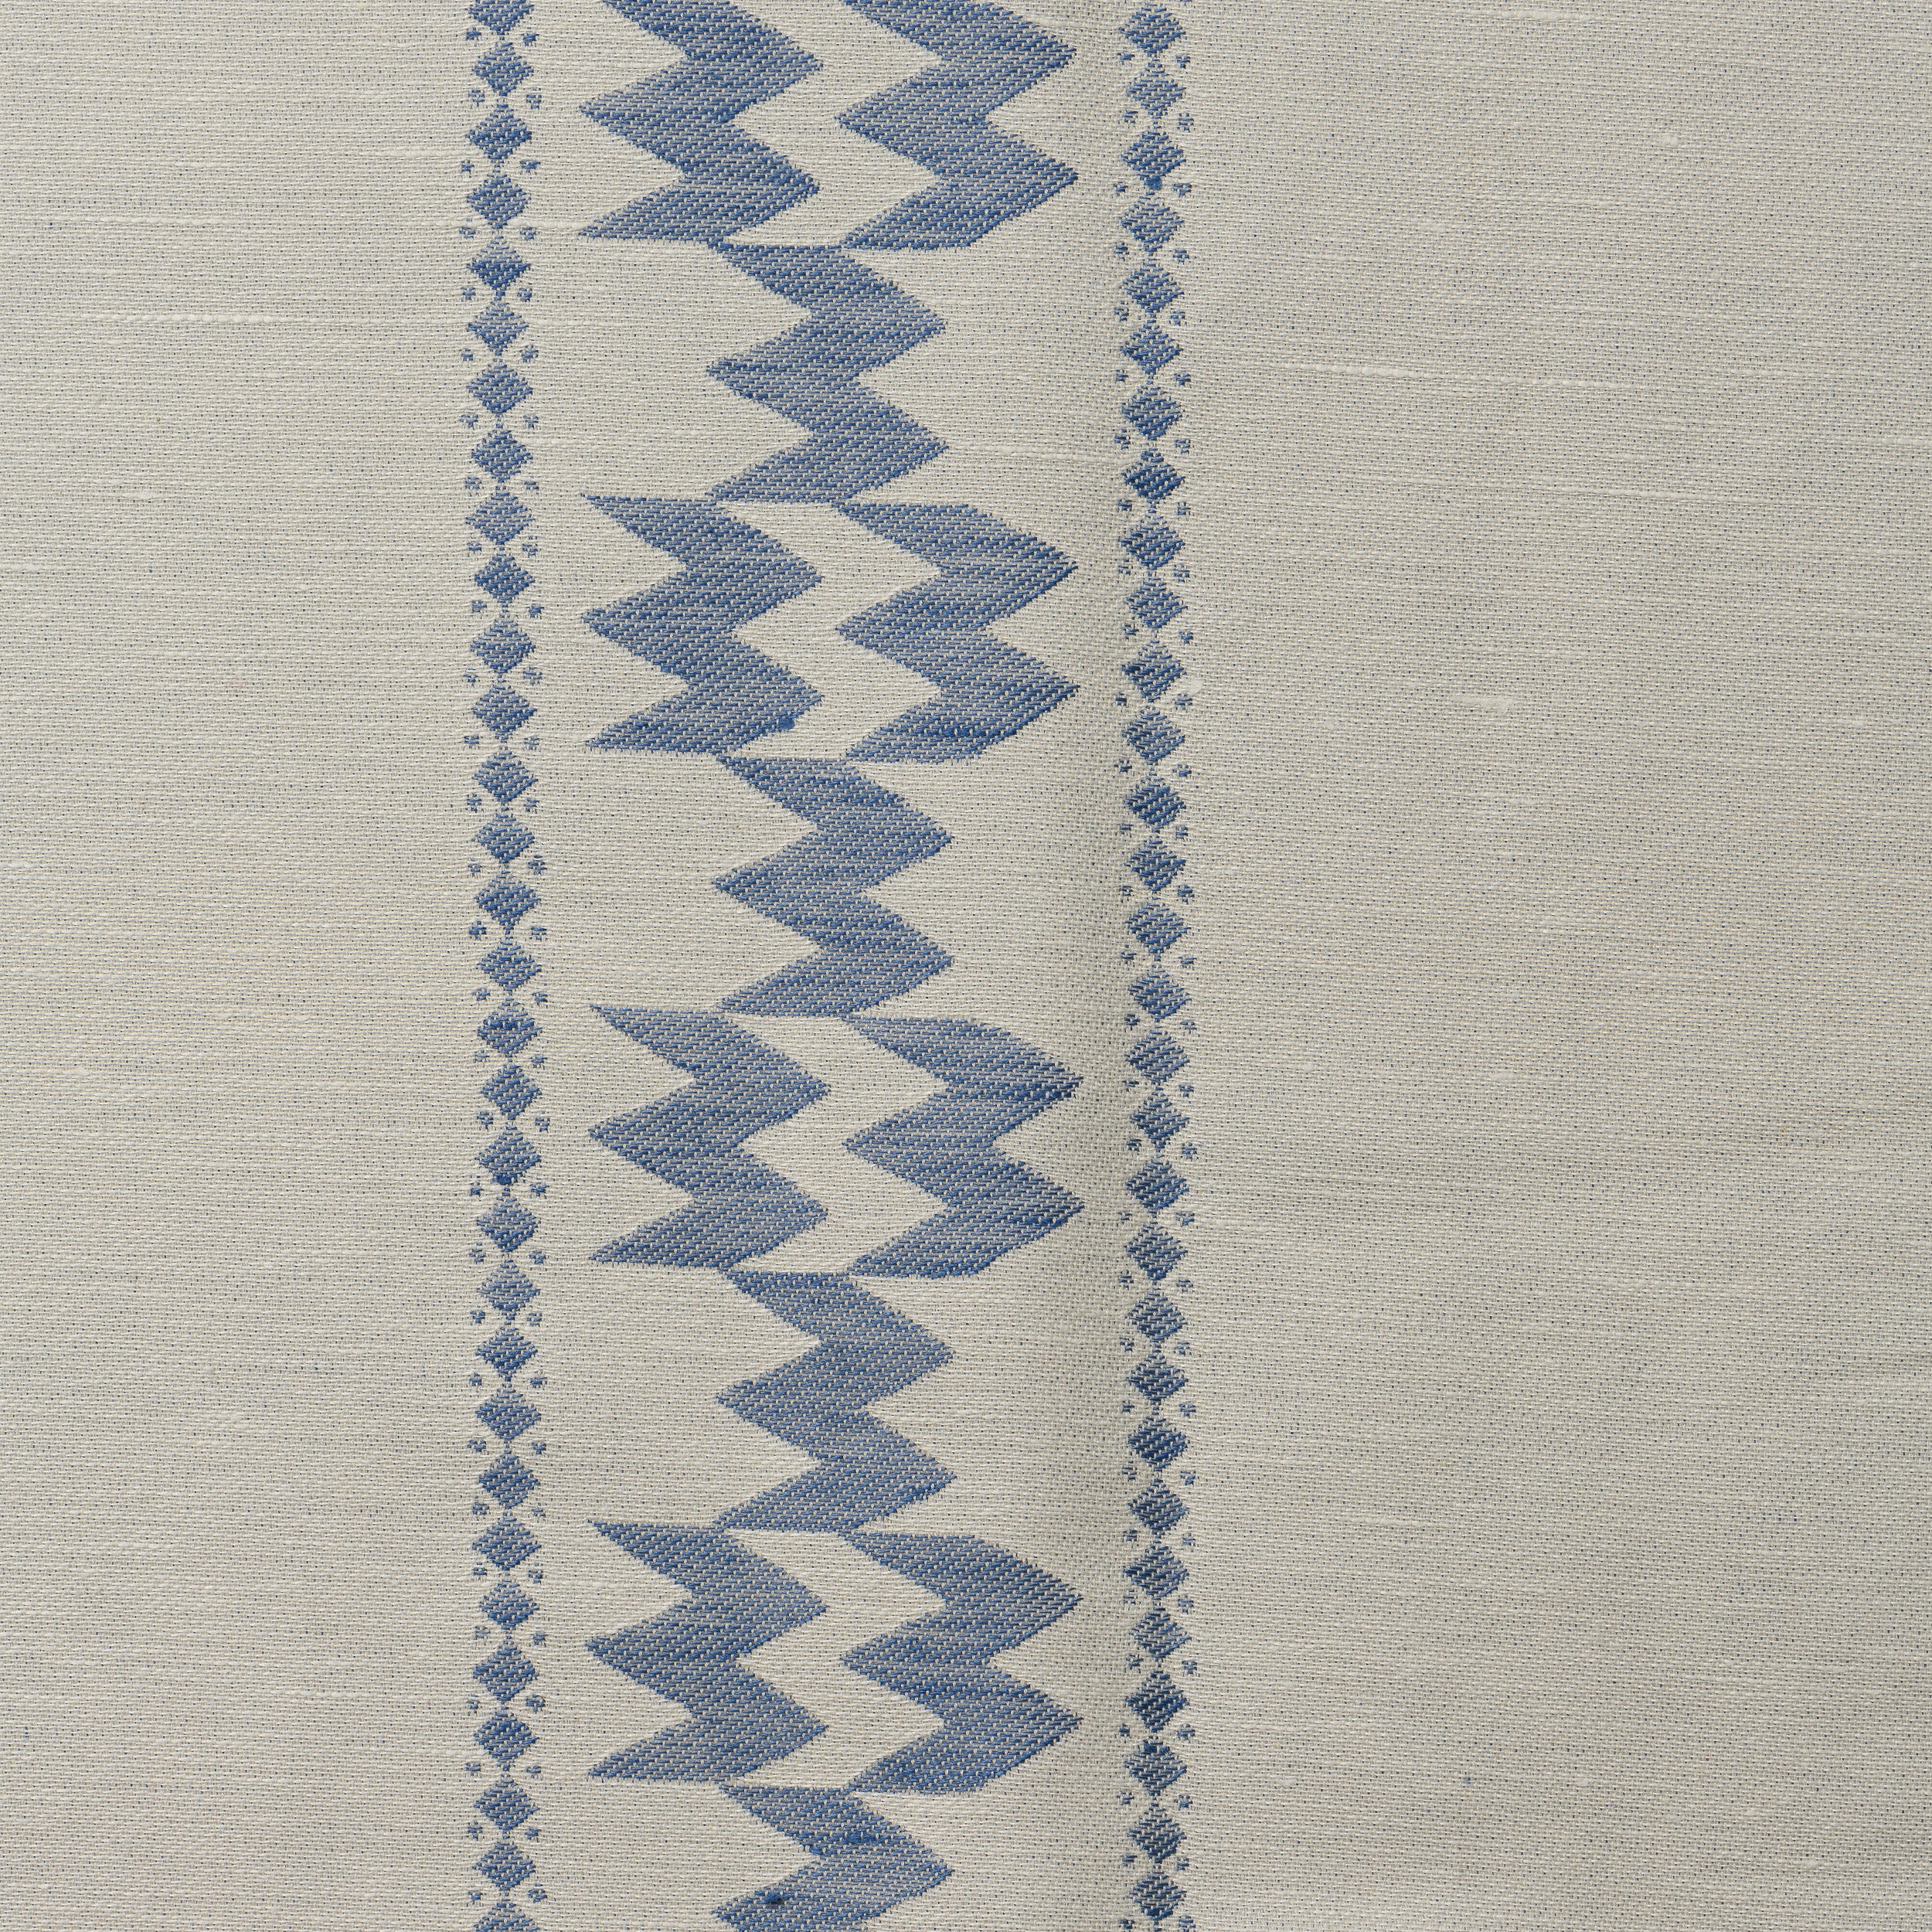 Joy of Print X Tori Murphy Zig Zag Stripe Linen Blend Fabric Indigo